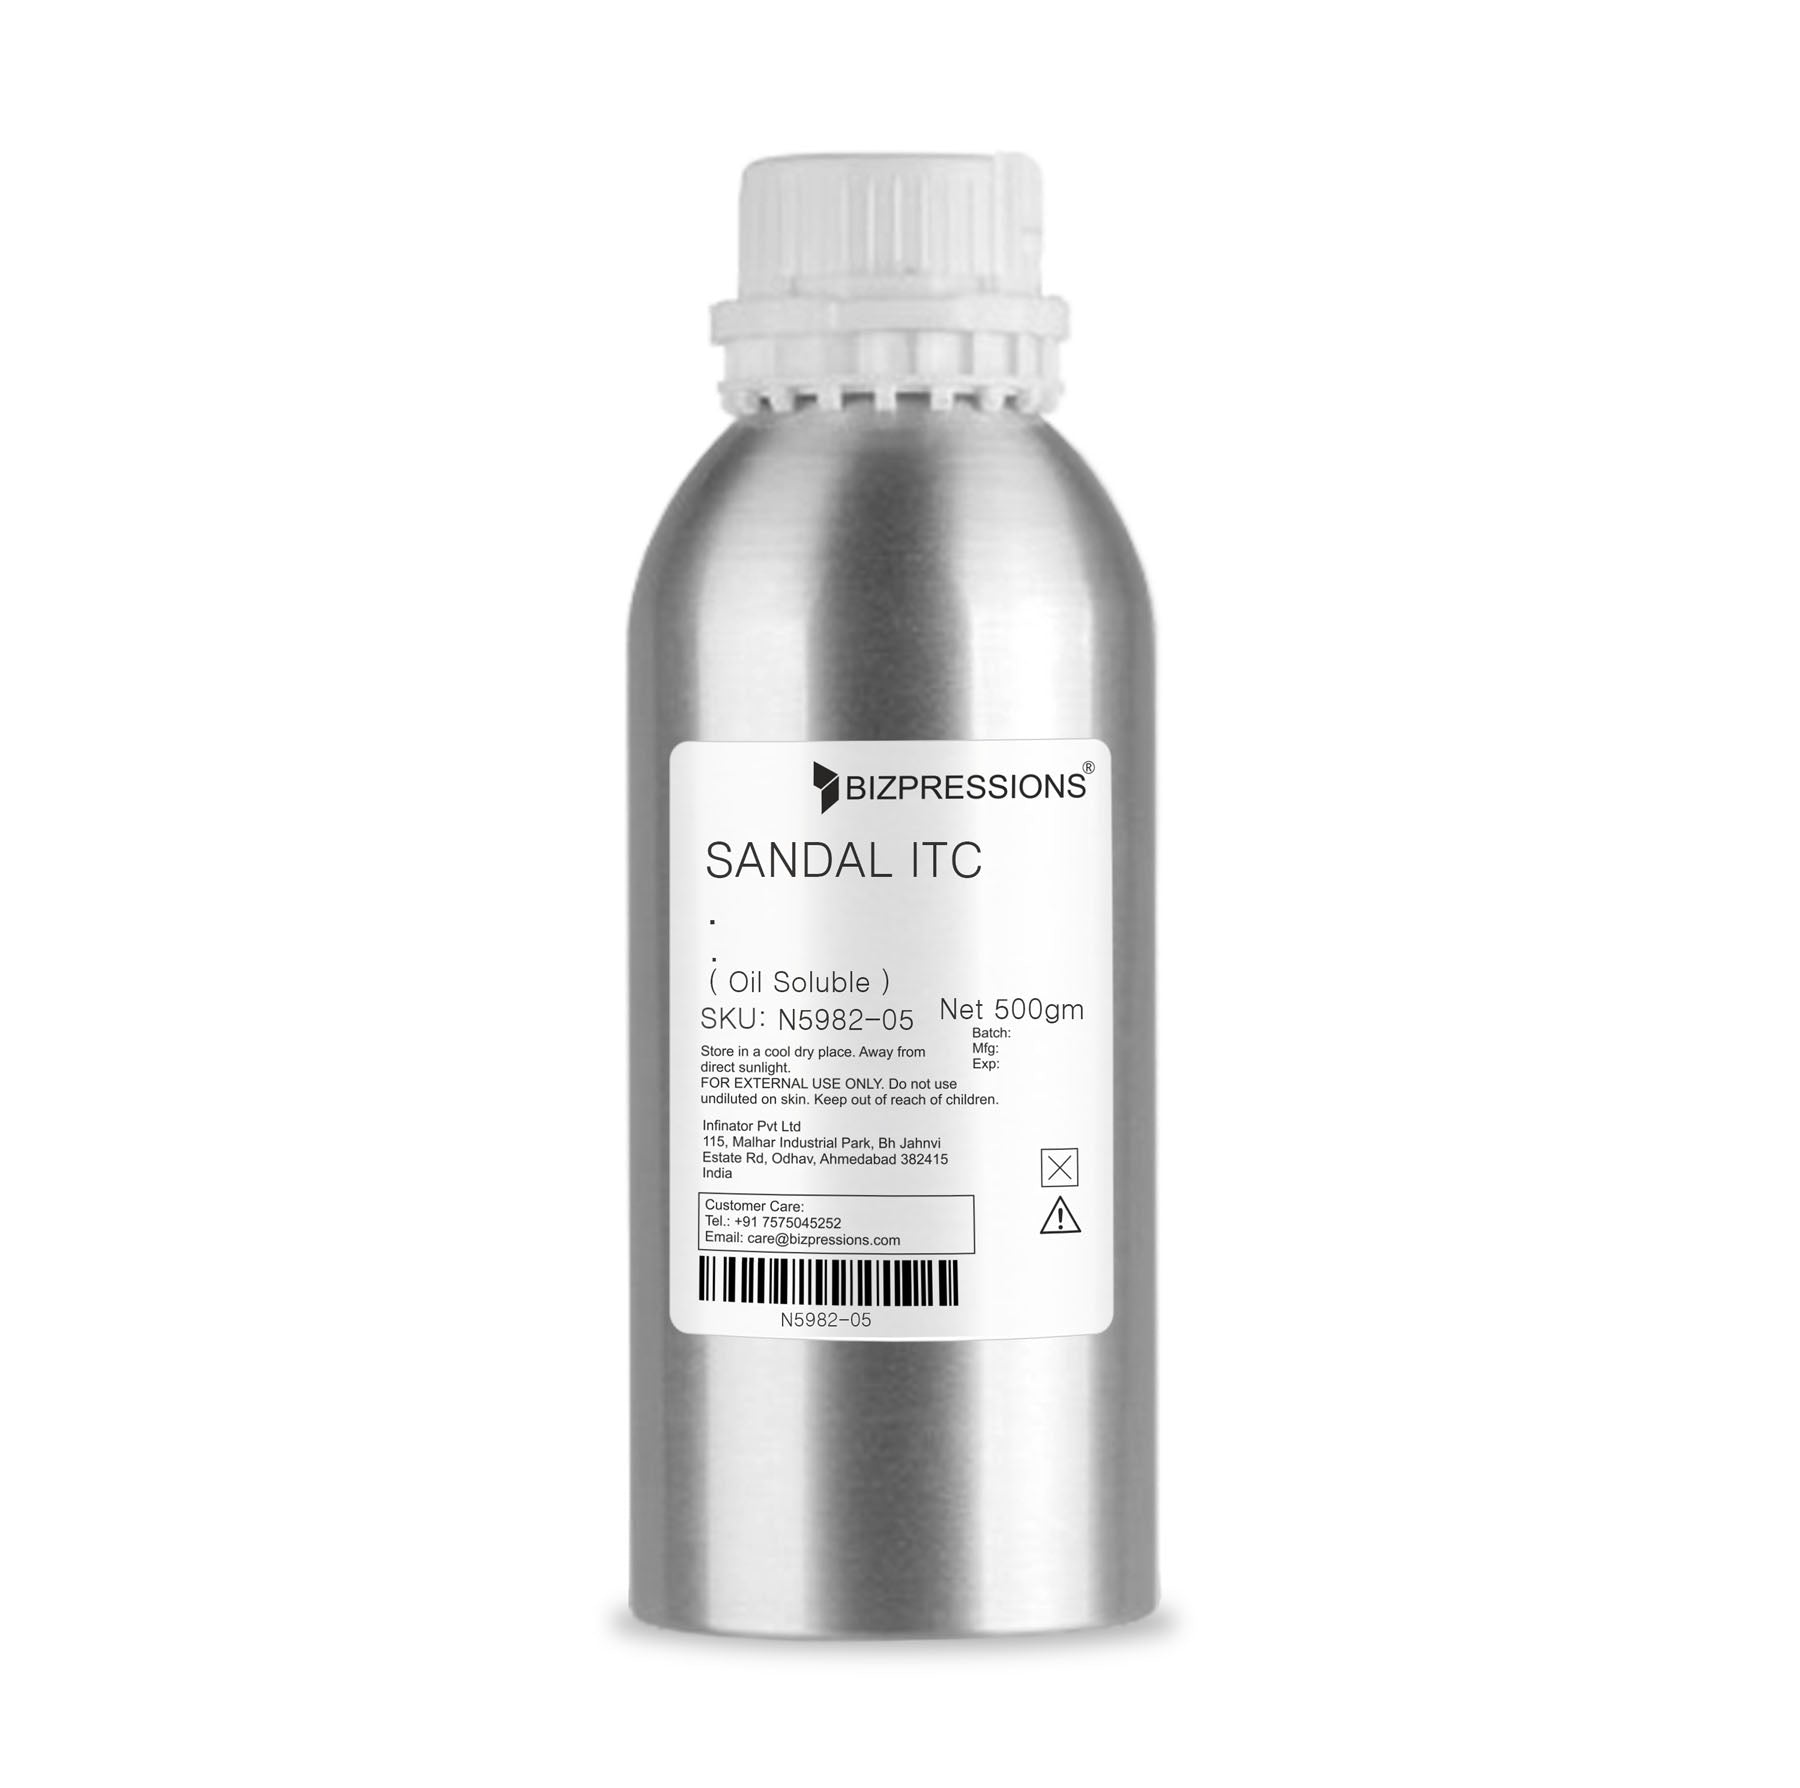 SANDAL ITC - Fragrance ( Oil Soluble )